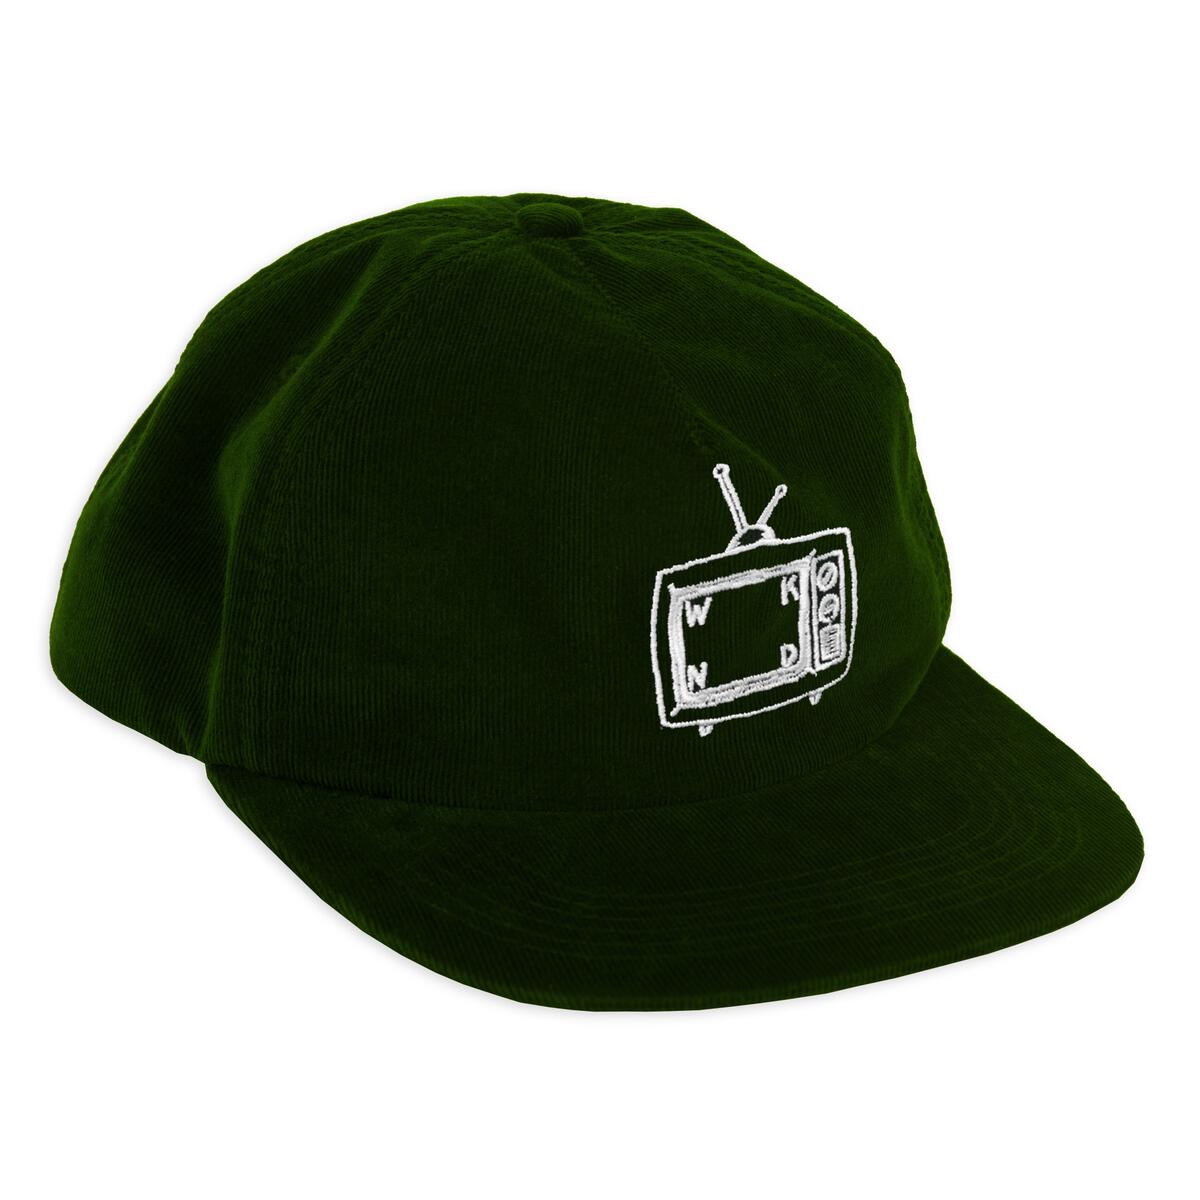 CORD TV LOGO 5 PANEL CAP - Green